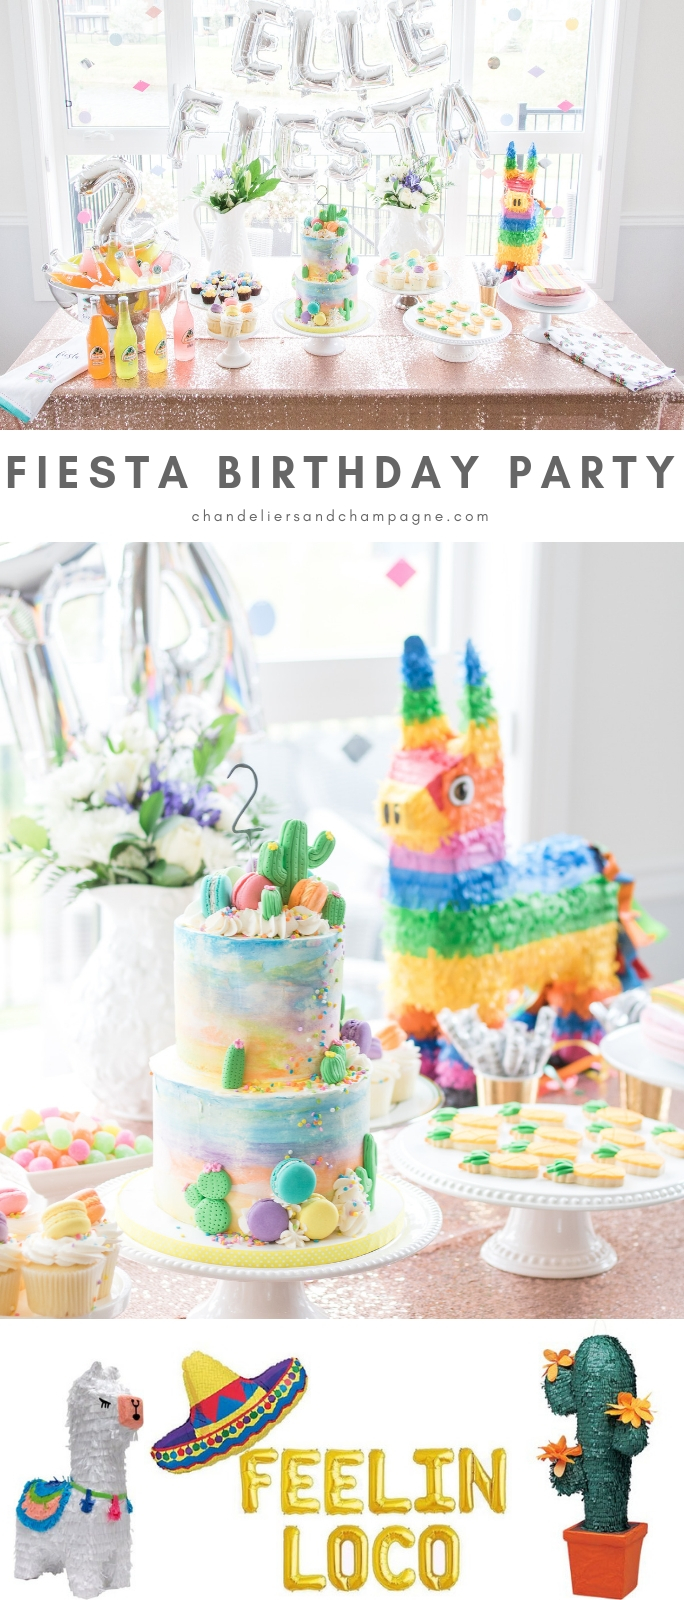 Fiesta Party Ideas - Fiesta-themed party - Fiesta Birthday Party Ideas - Desert birthday party ideas - Piñata ideas - Mexican inspired party ideas